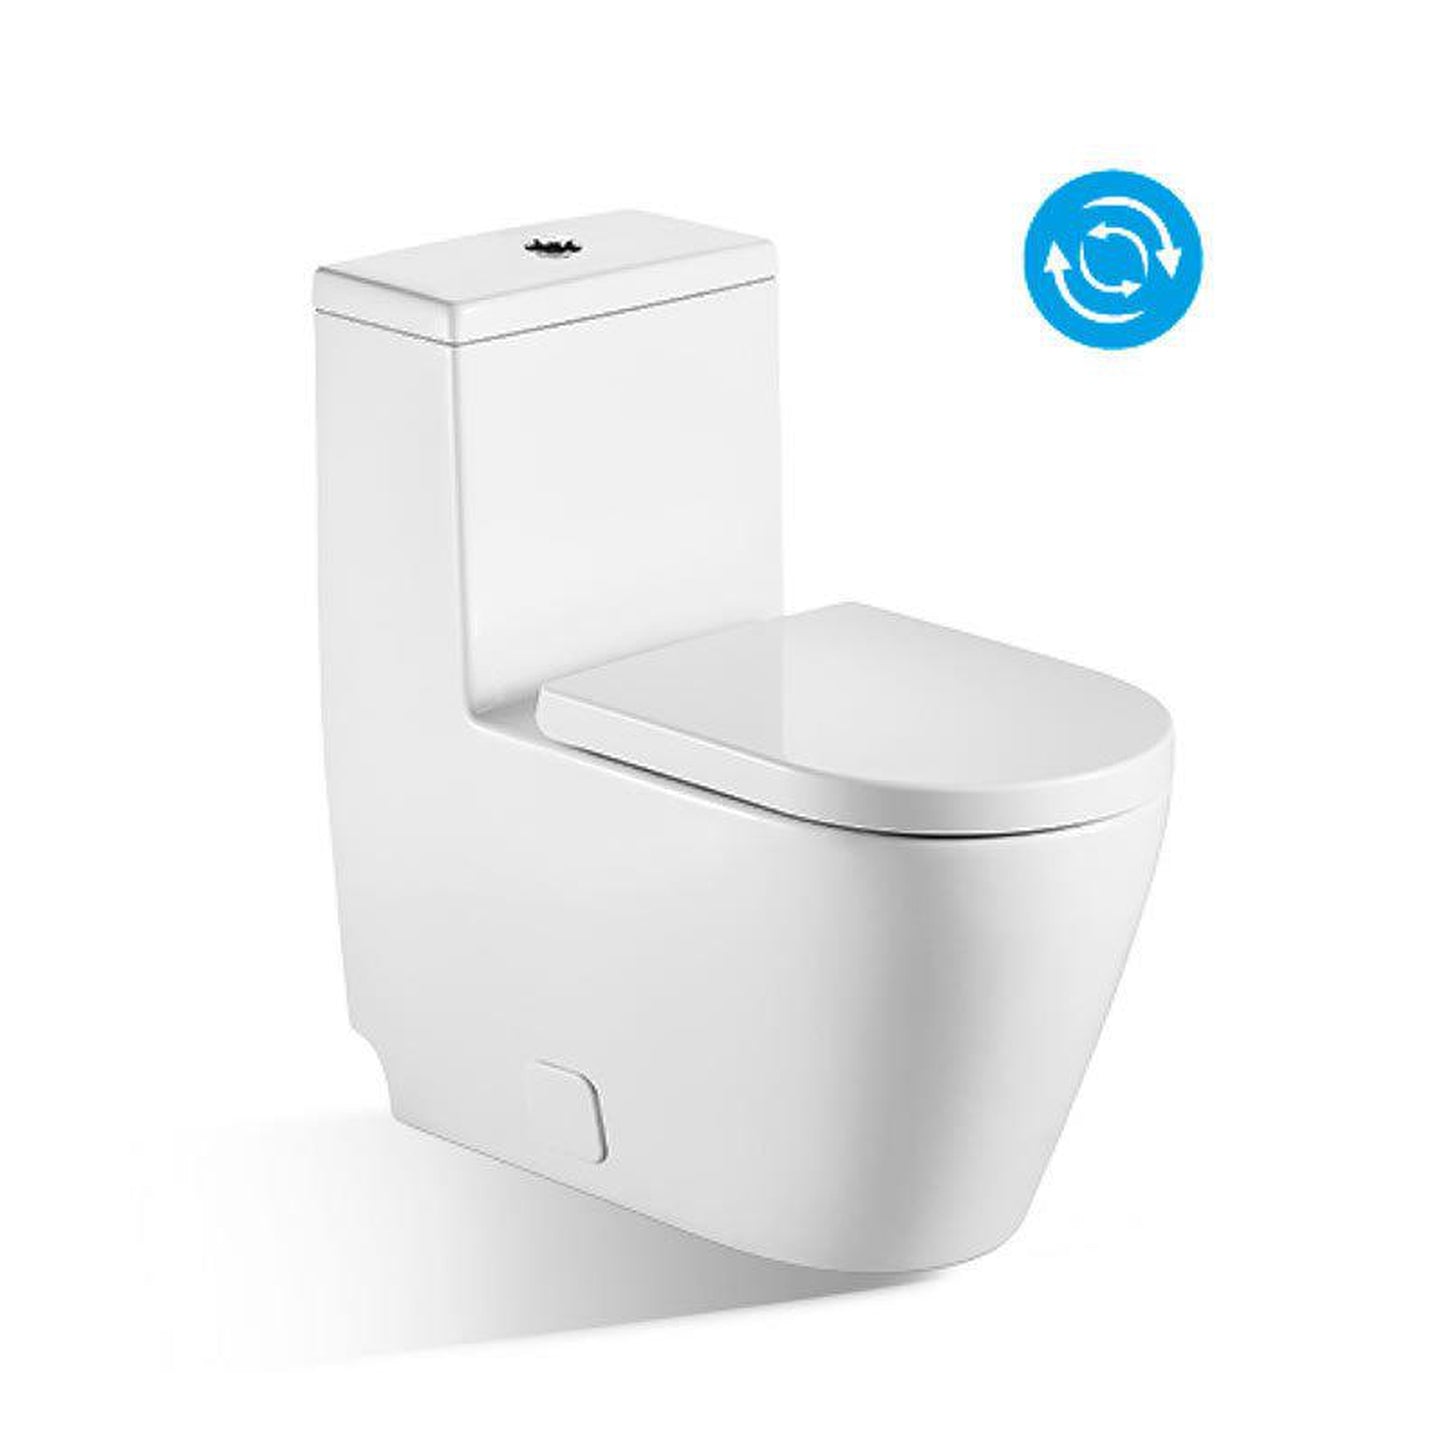 BNK BTO BL-132 Siphon Flushing Toilet